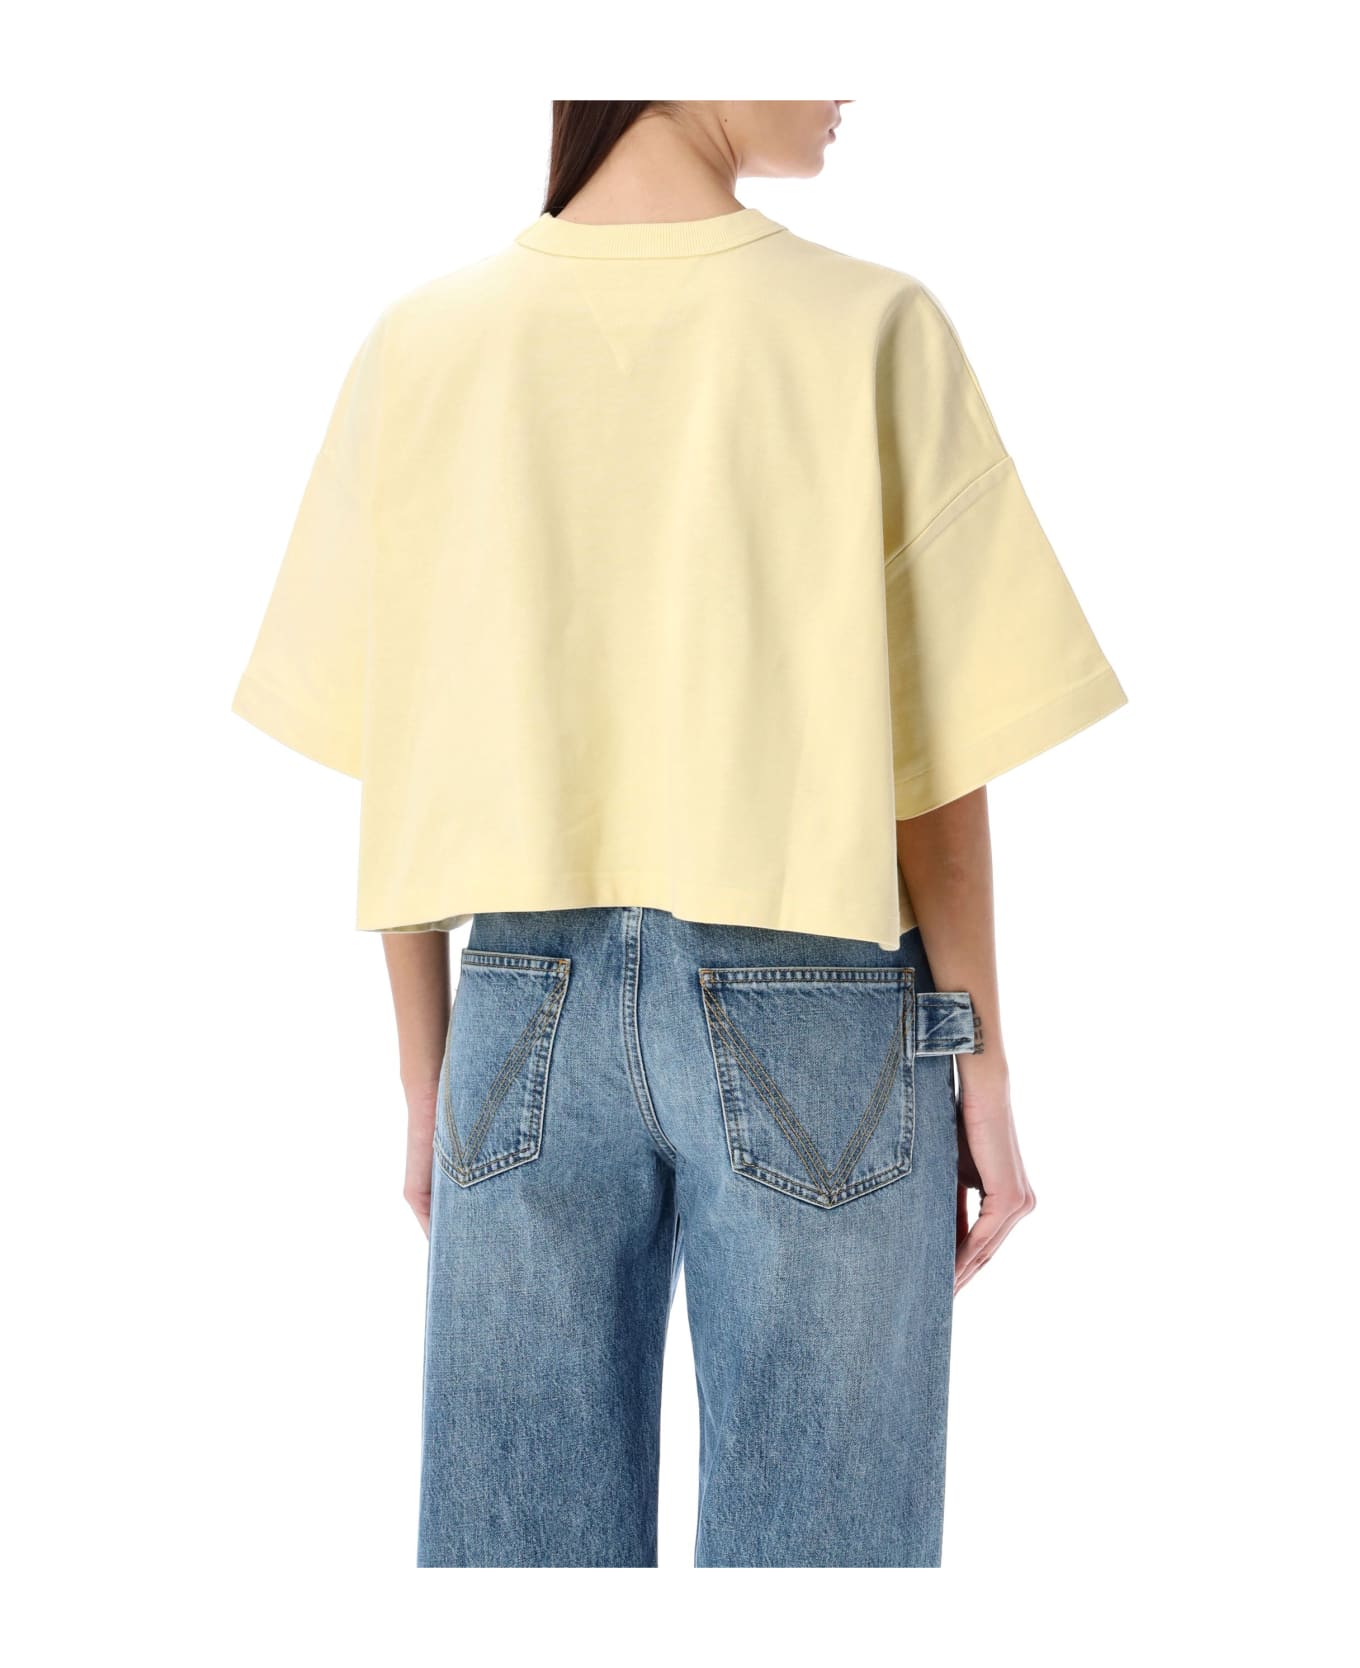 Bottega Veneta Cropped Pocket T-shirt - Yellow